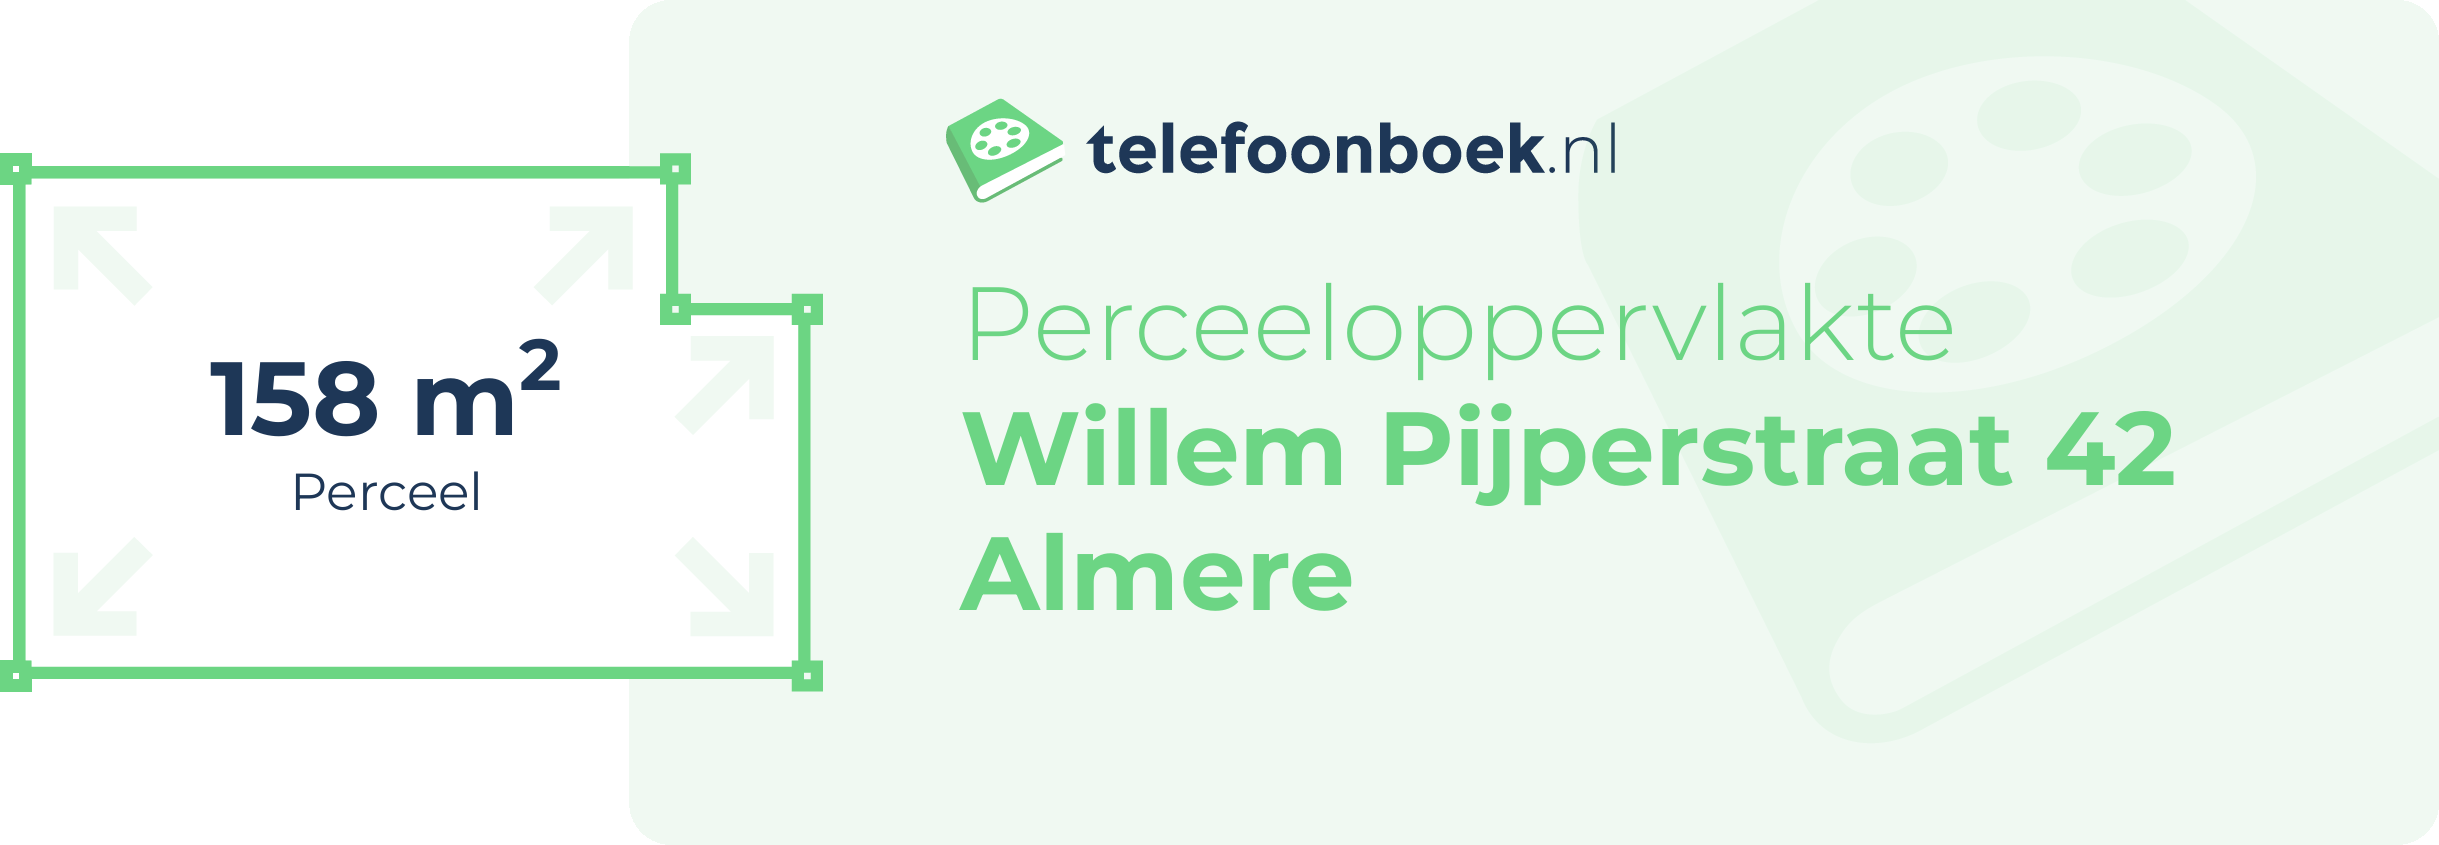 Perceeloppervlakte Willem Pijperstraat 42 Almere